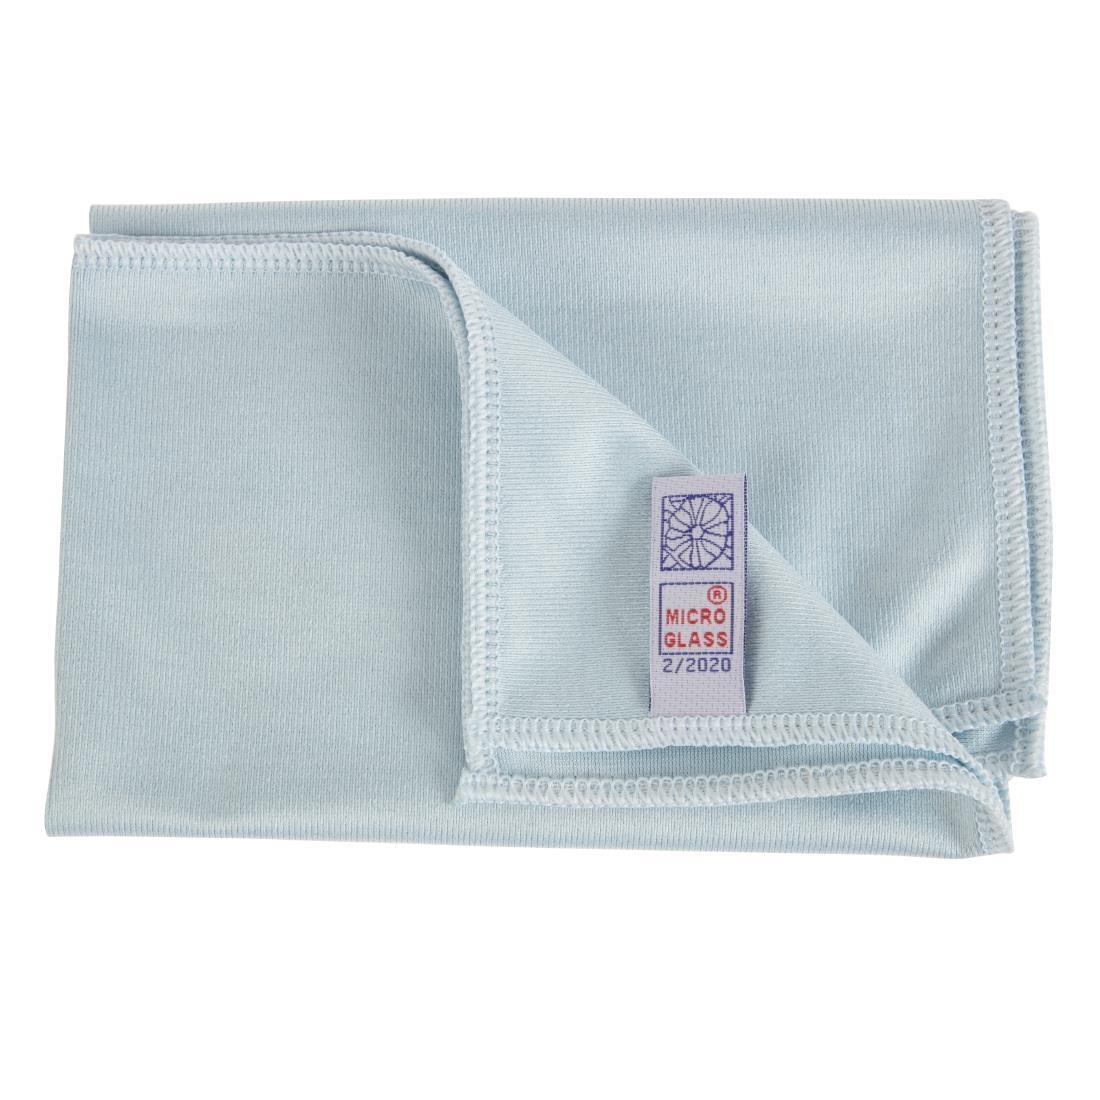 Jantex Microglass Cloth - DN842  - 3